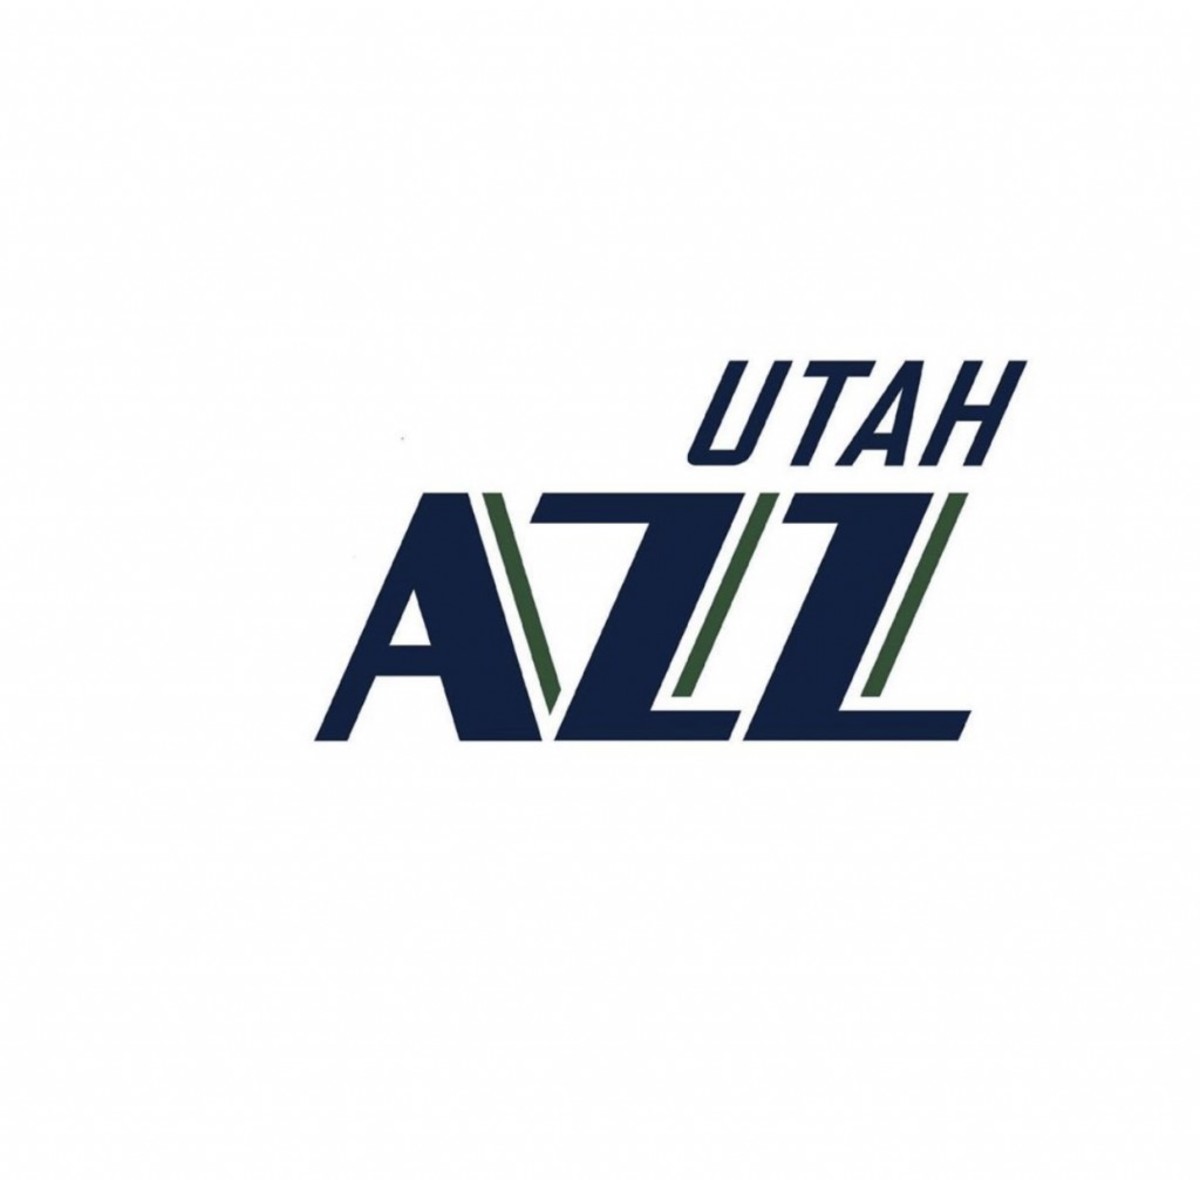 NBA Fans Troll Utah Jazz With Utah 'Azz' Logo Edit